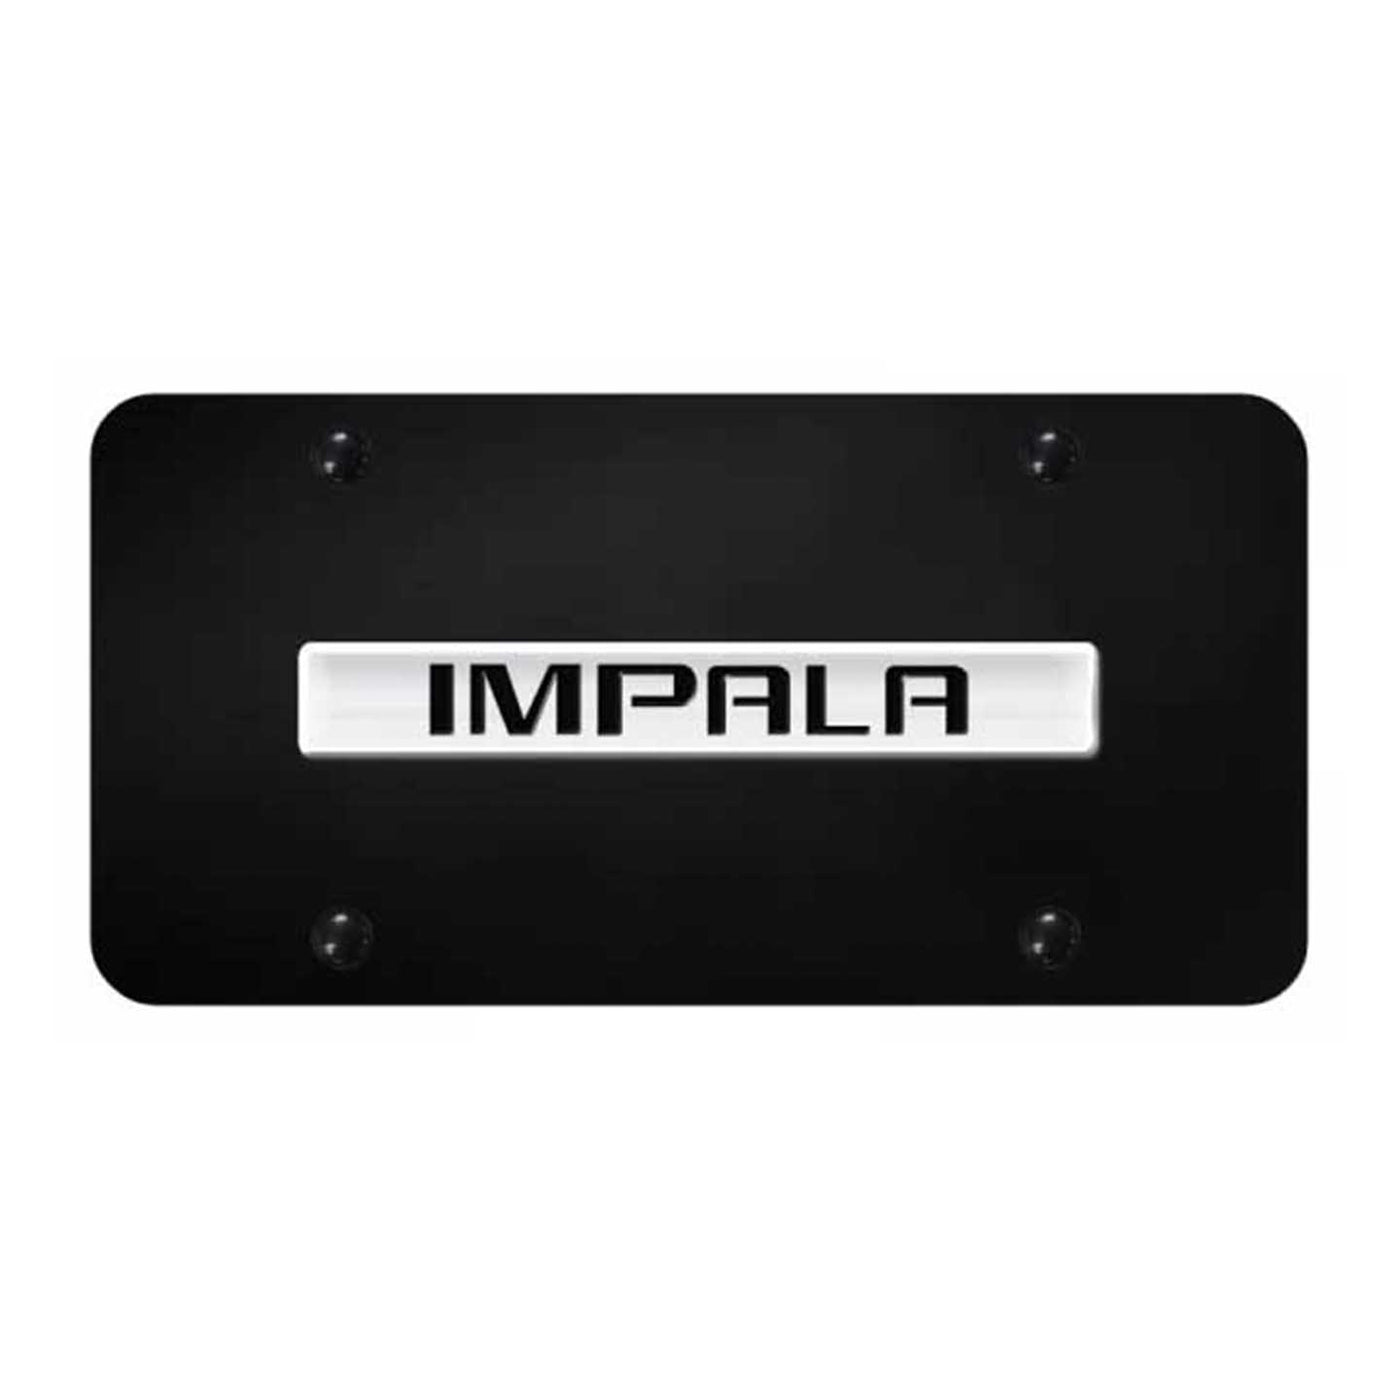 Impala Name License Plate - Chrome on Black